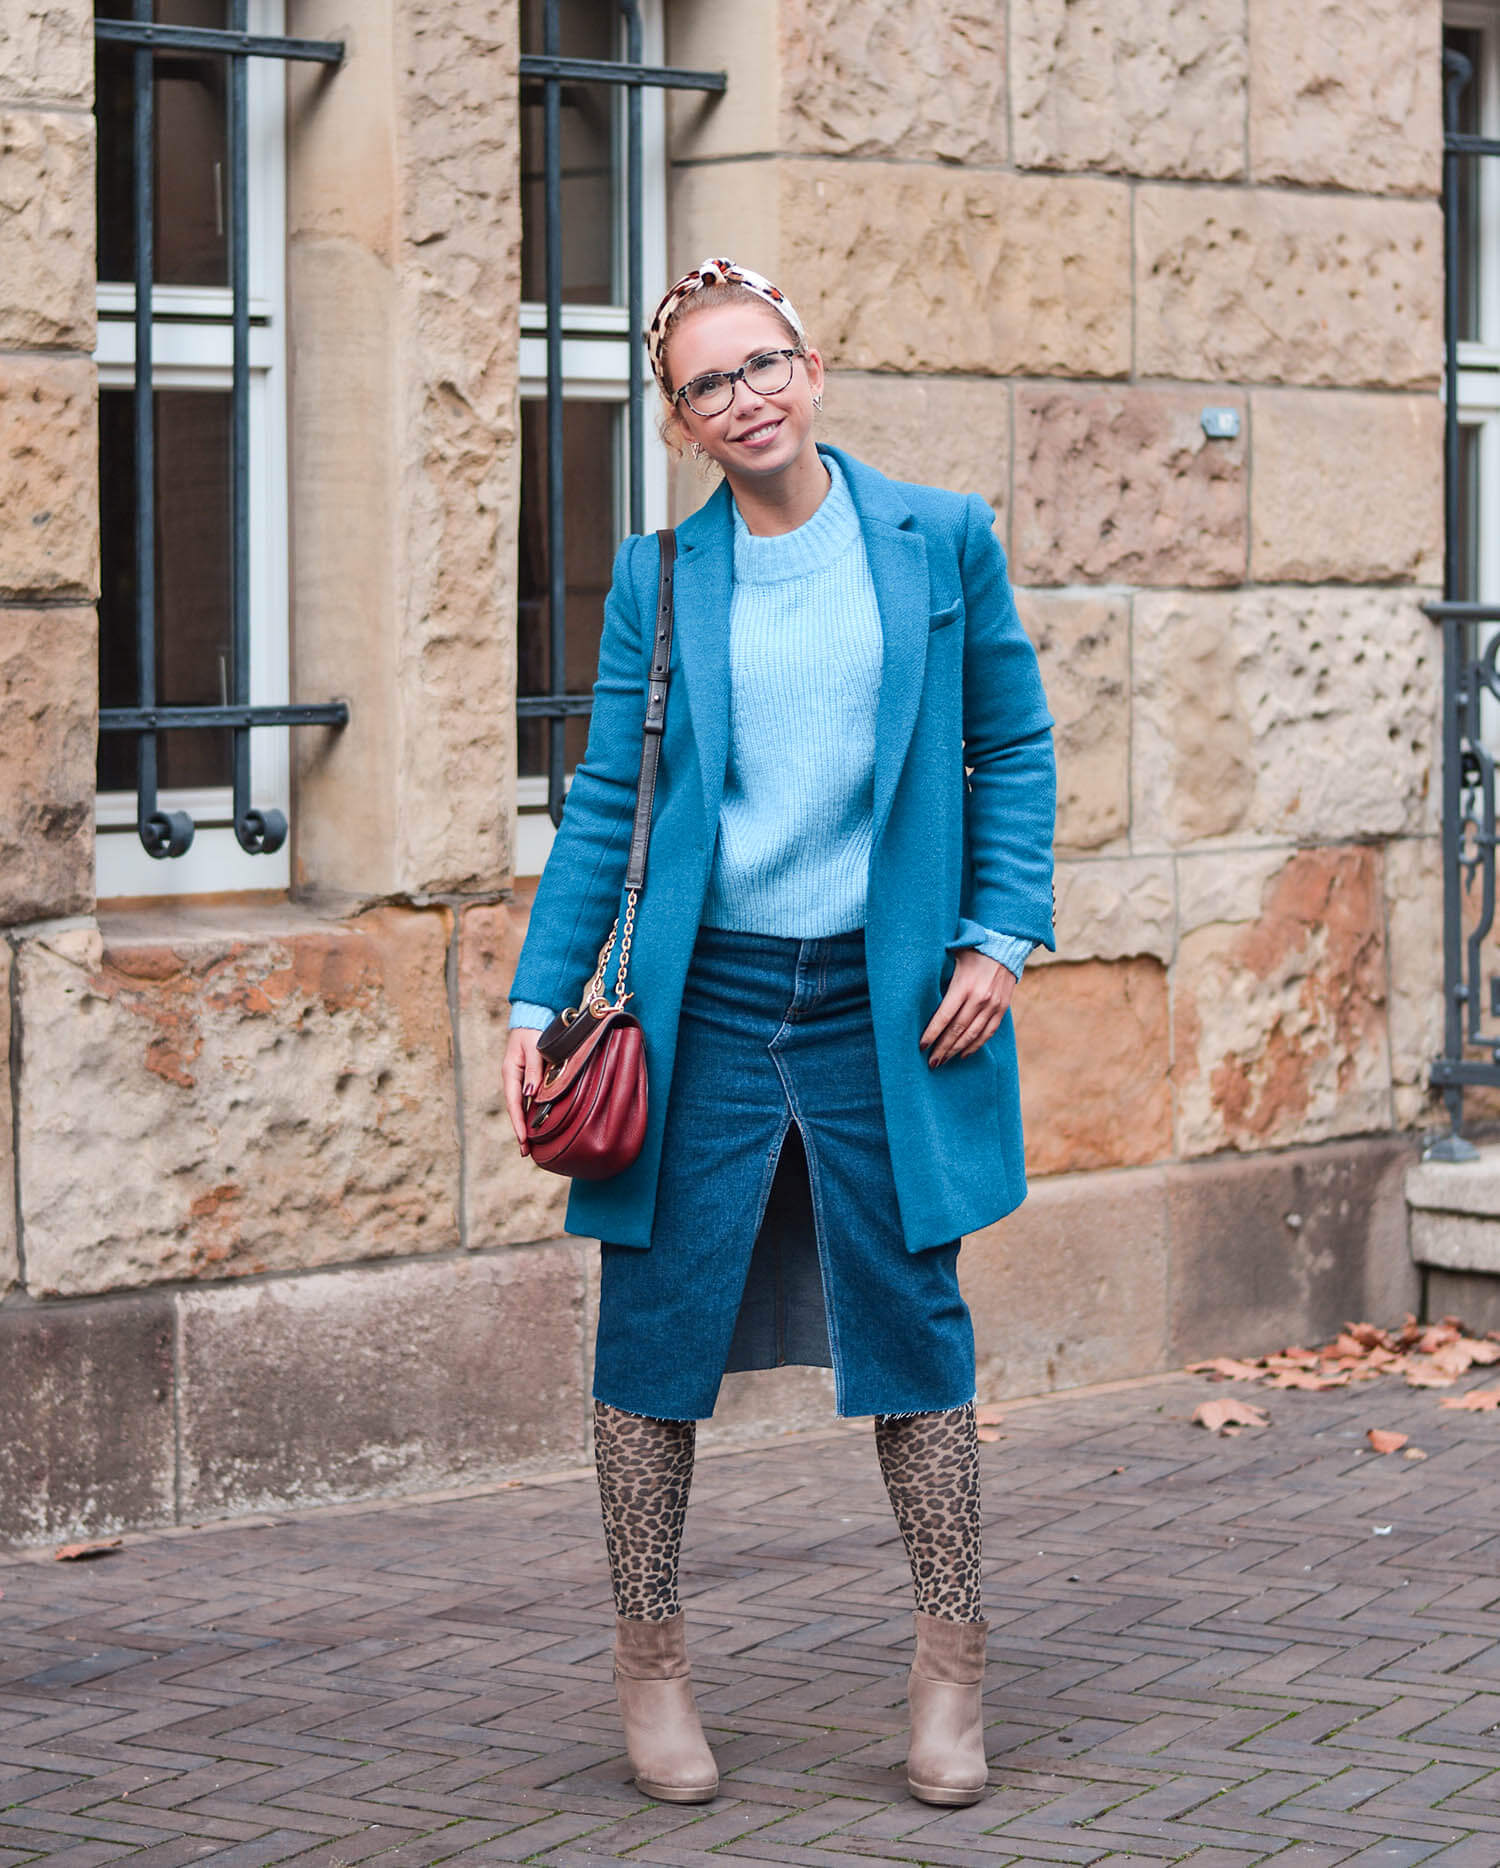 Petrol-Blue-meets-Leo-Print-Wool-Coat-Knit-Denim Skirt-Kationette-Winter-Outfit-Fashionblogger-Germany